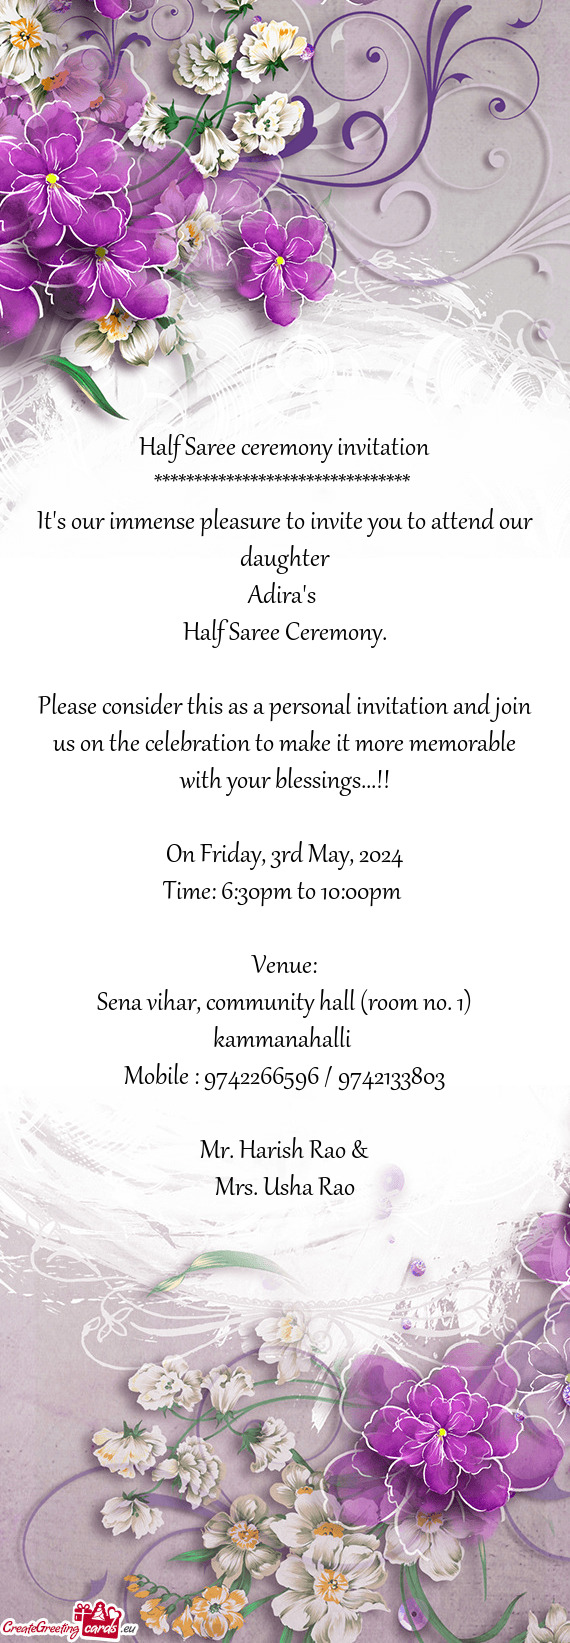 Half Saree ceremony invitation ******************************** It